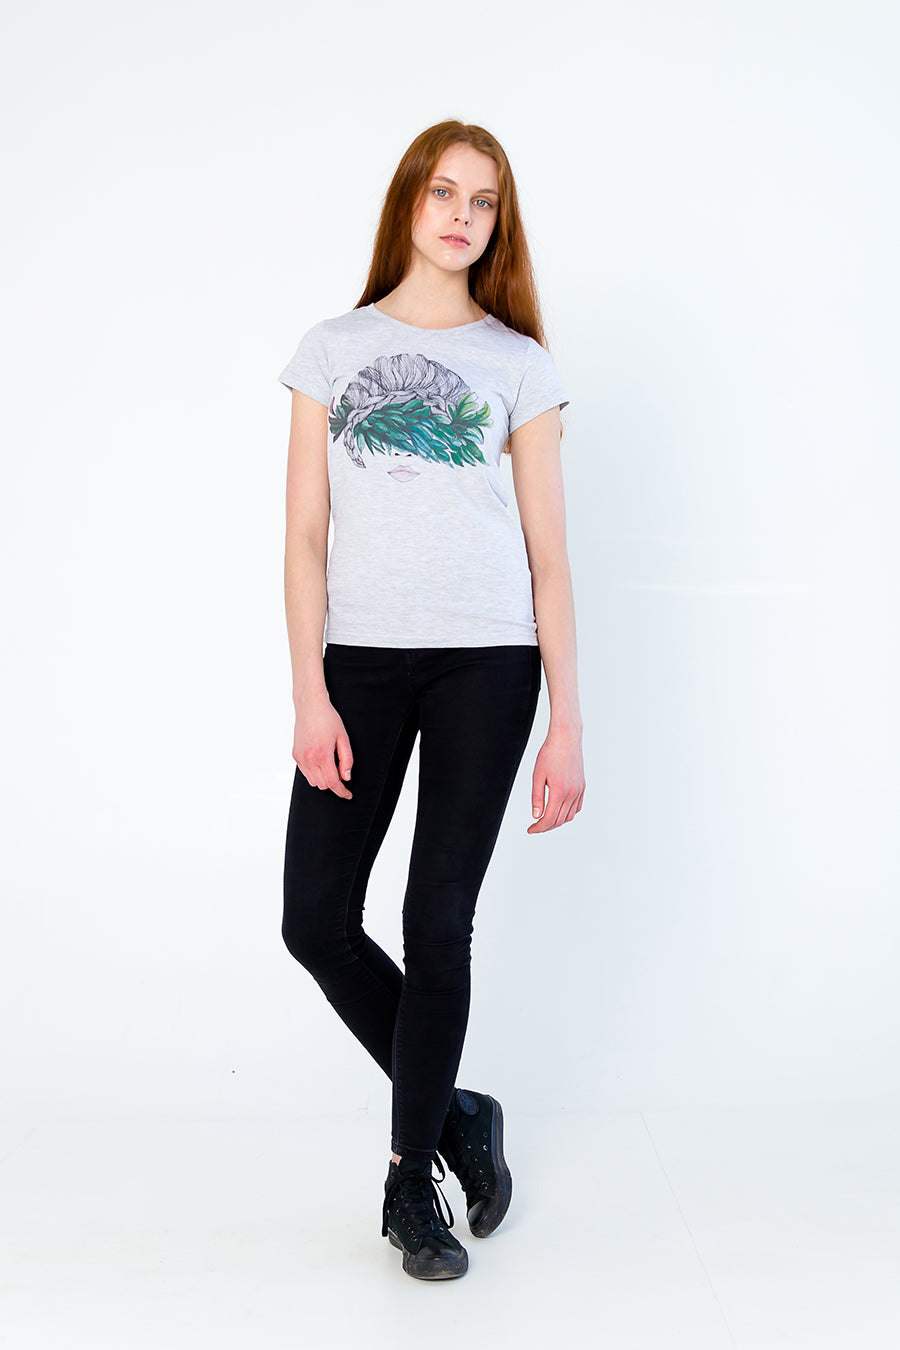 Lilit-Sarkisian-Flower-t-shirt